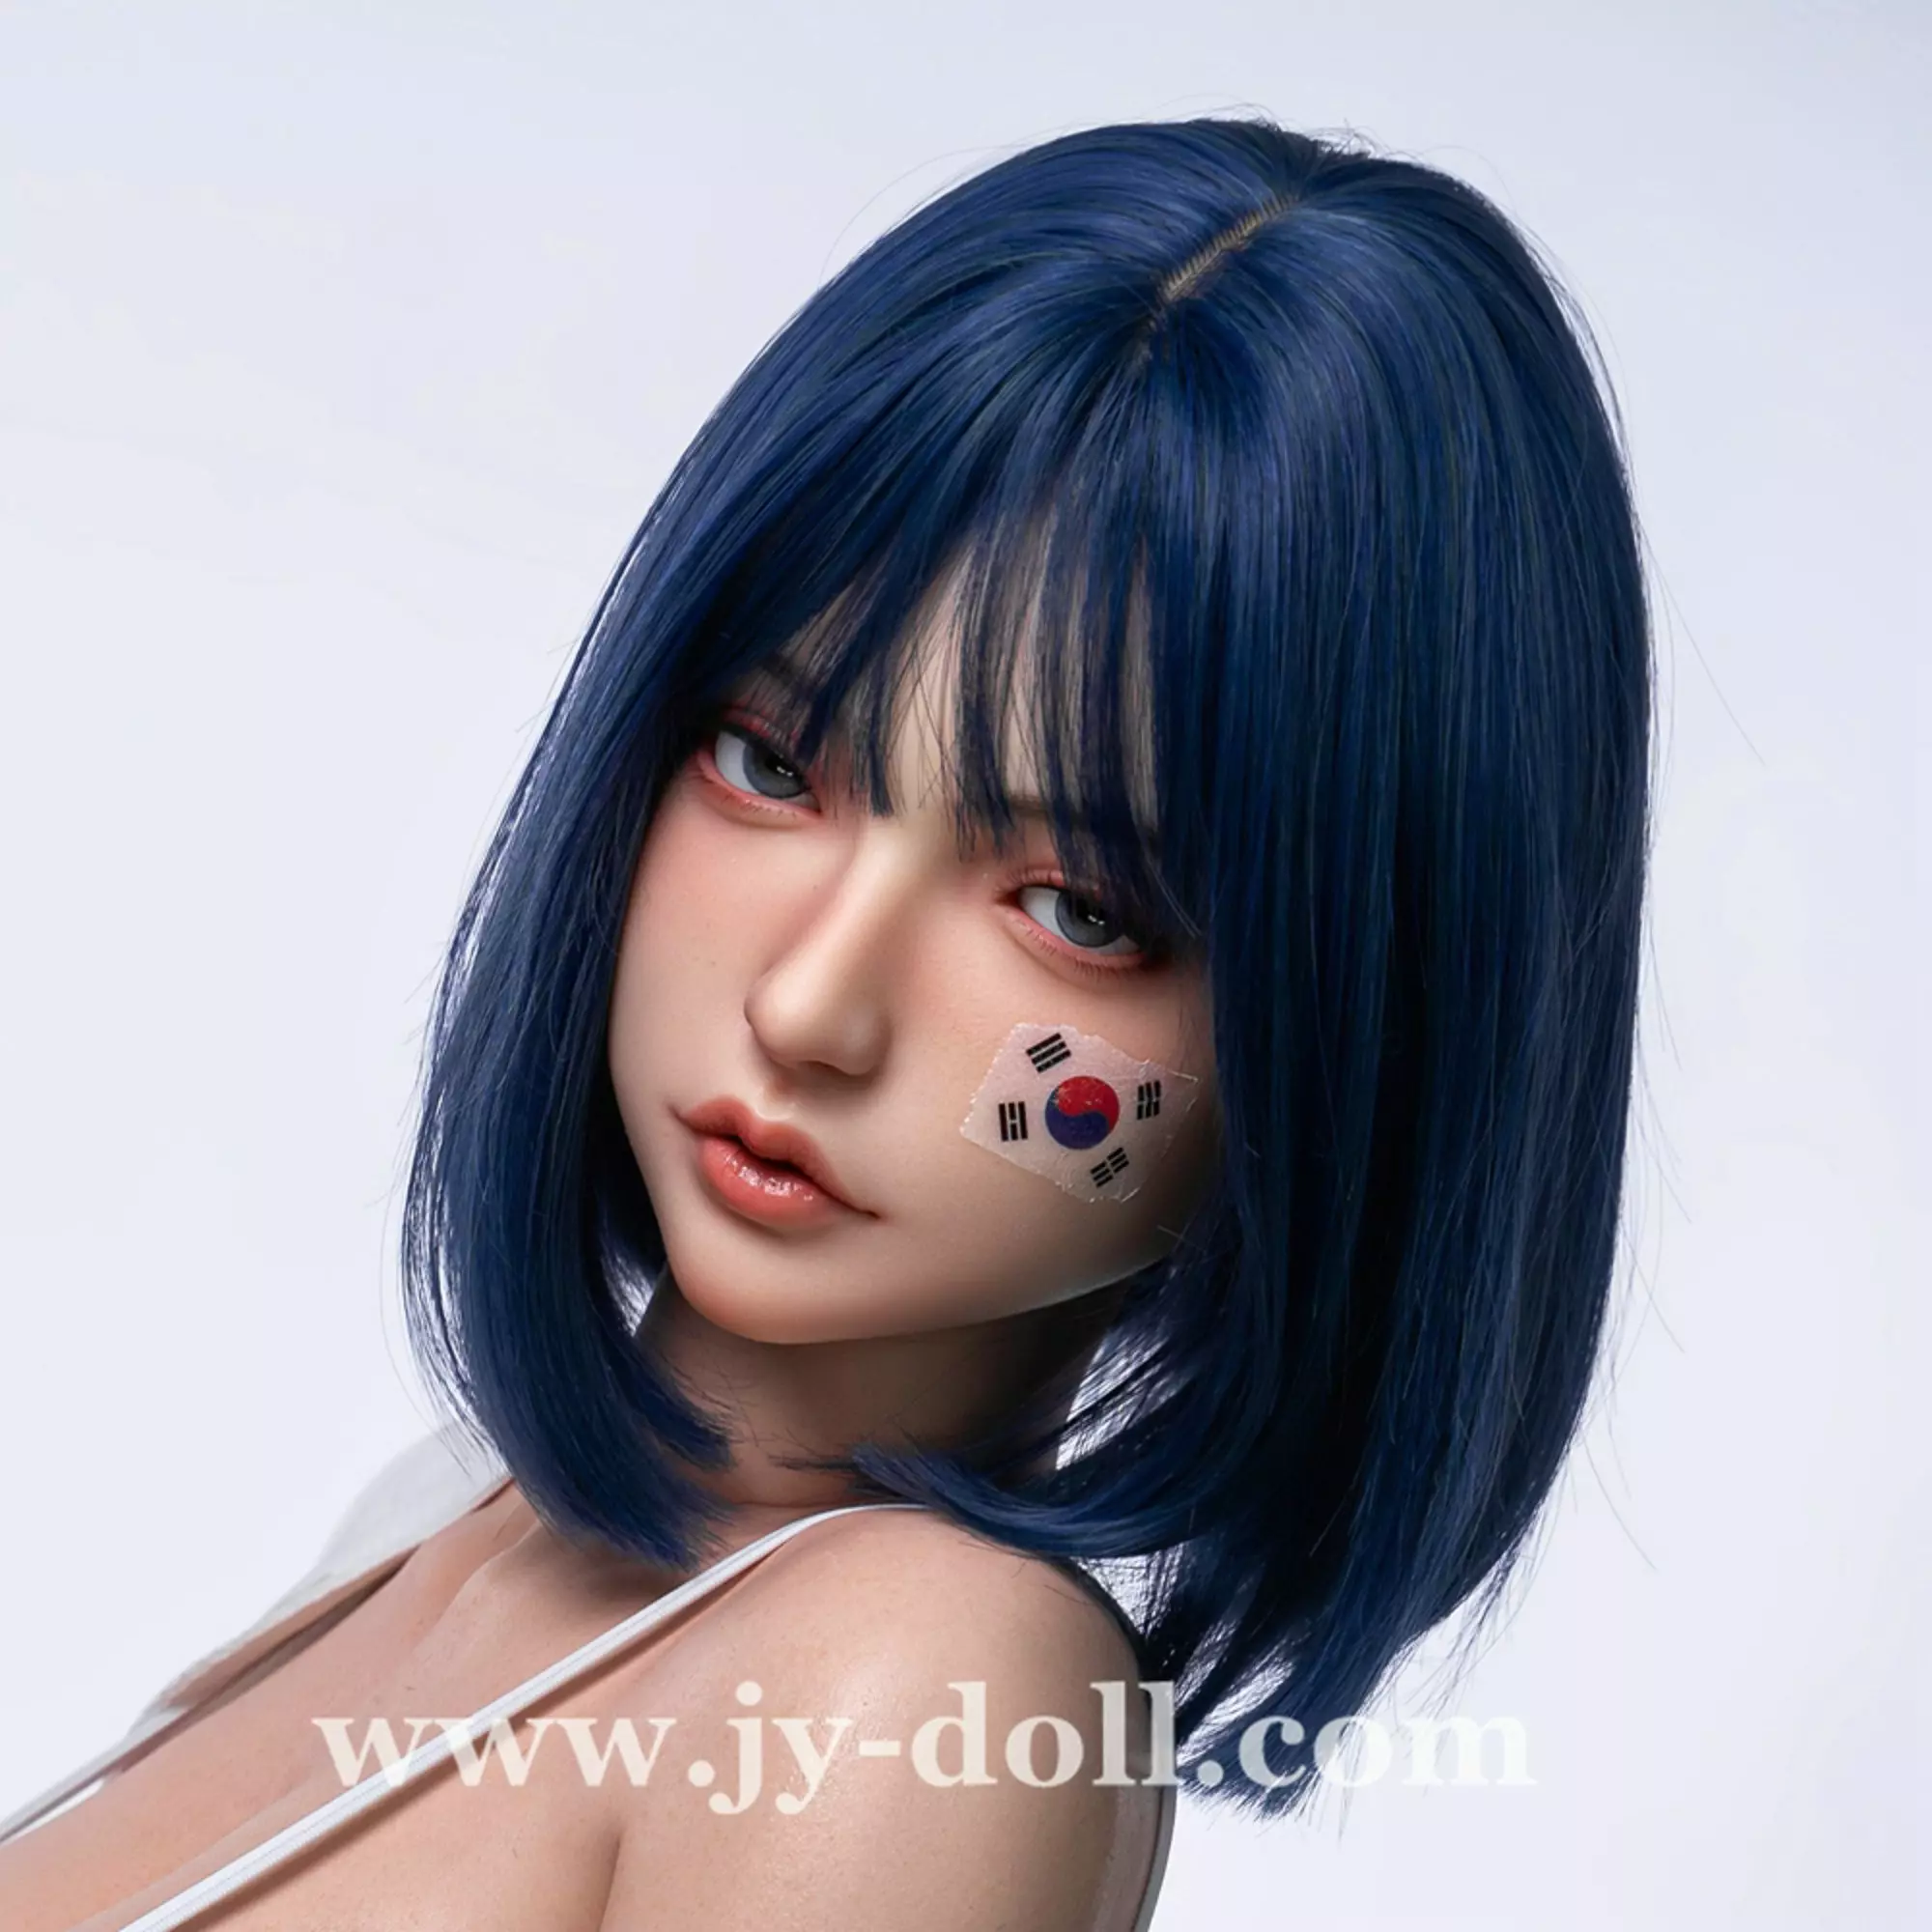 JY Doll silicone sex doll head Annai, removable jaw